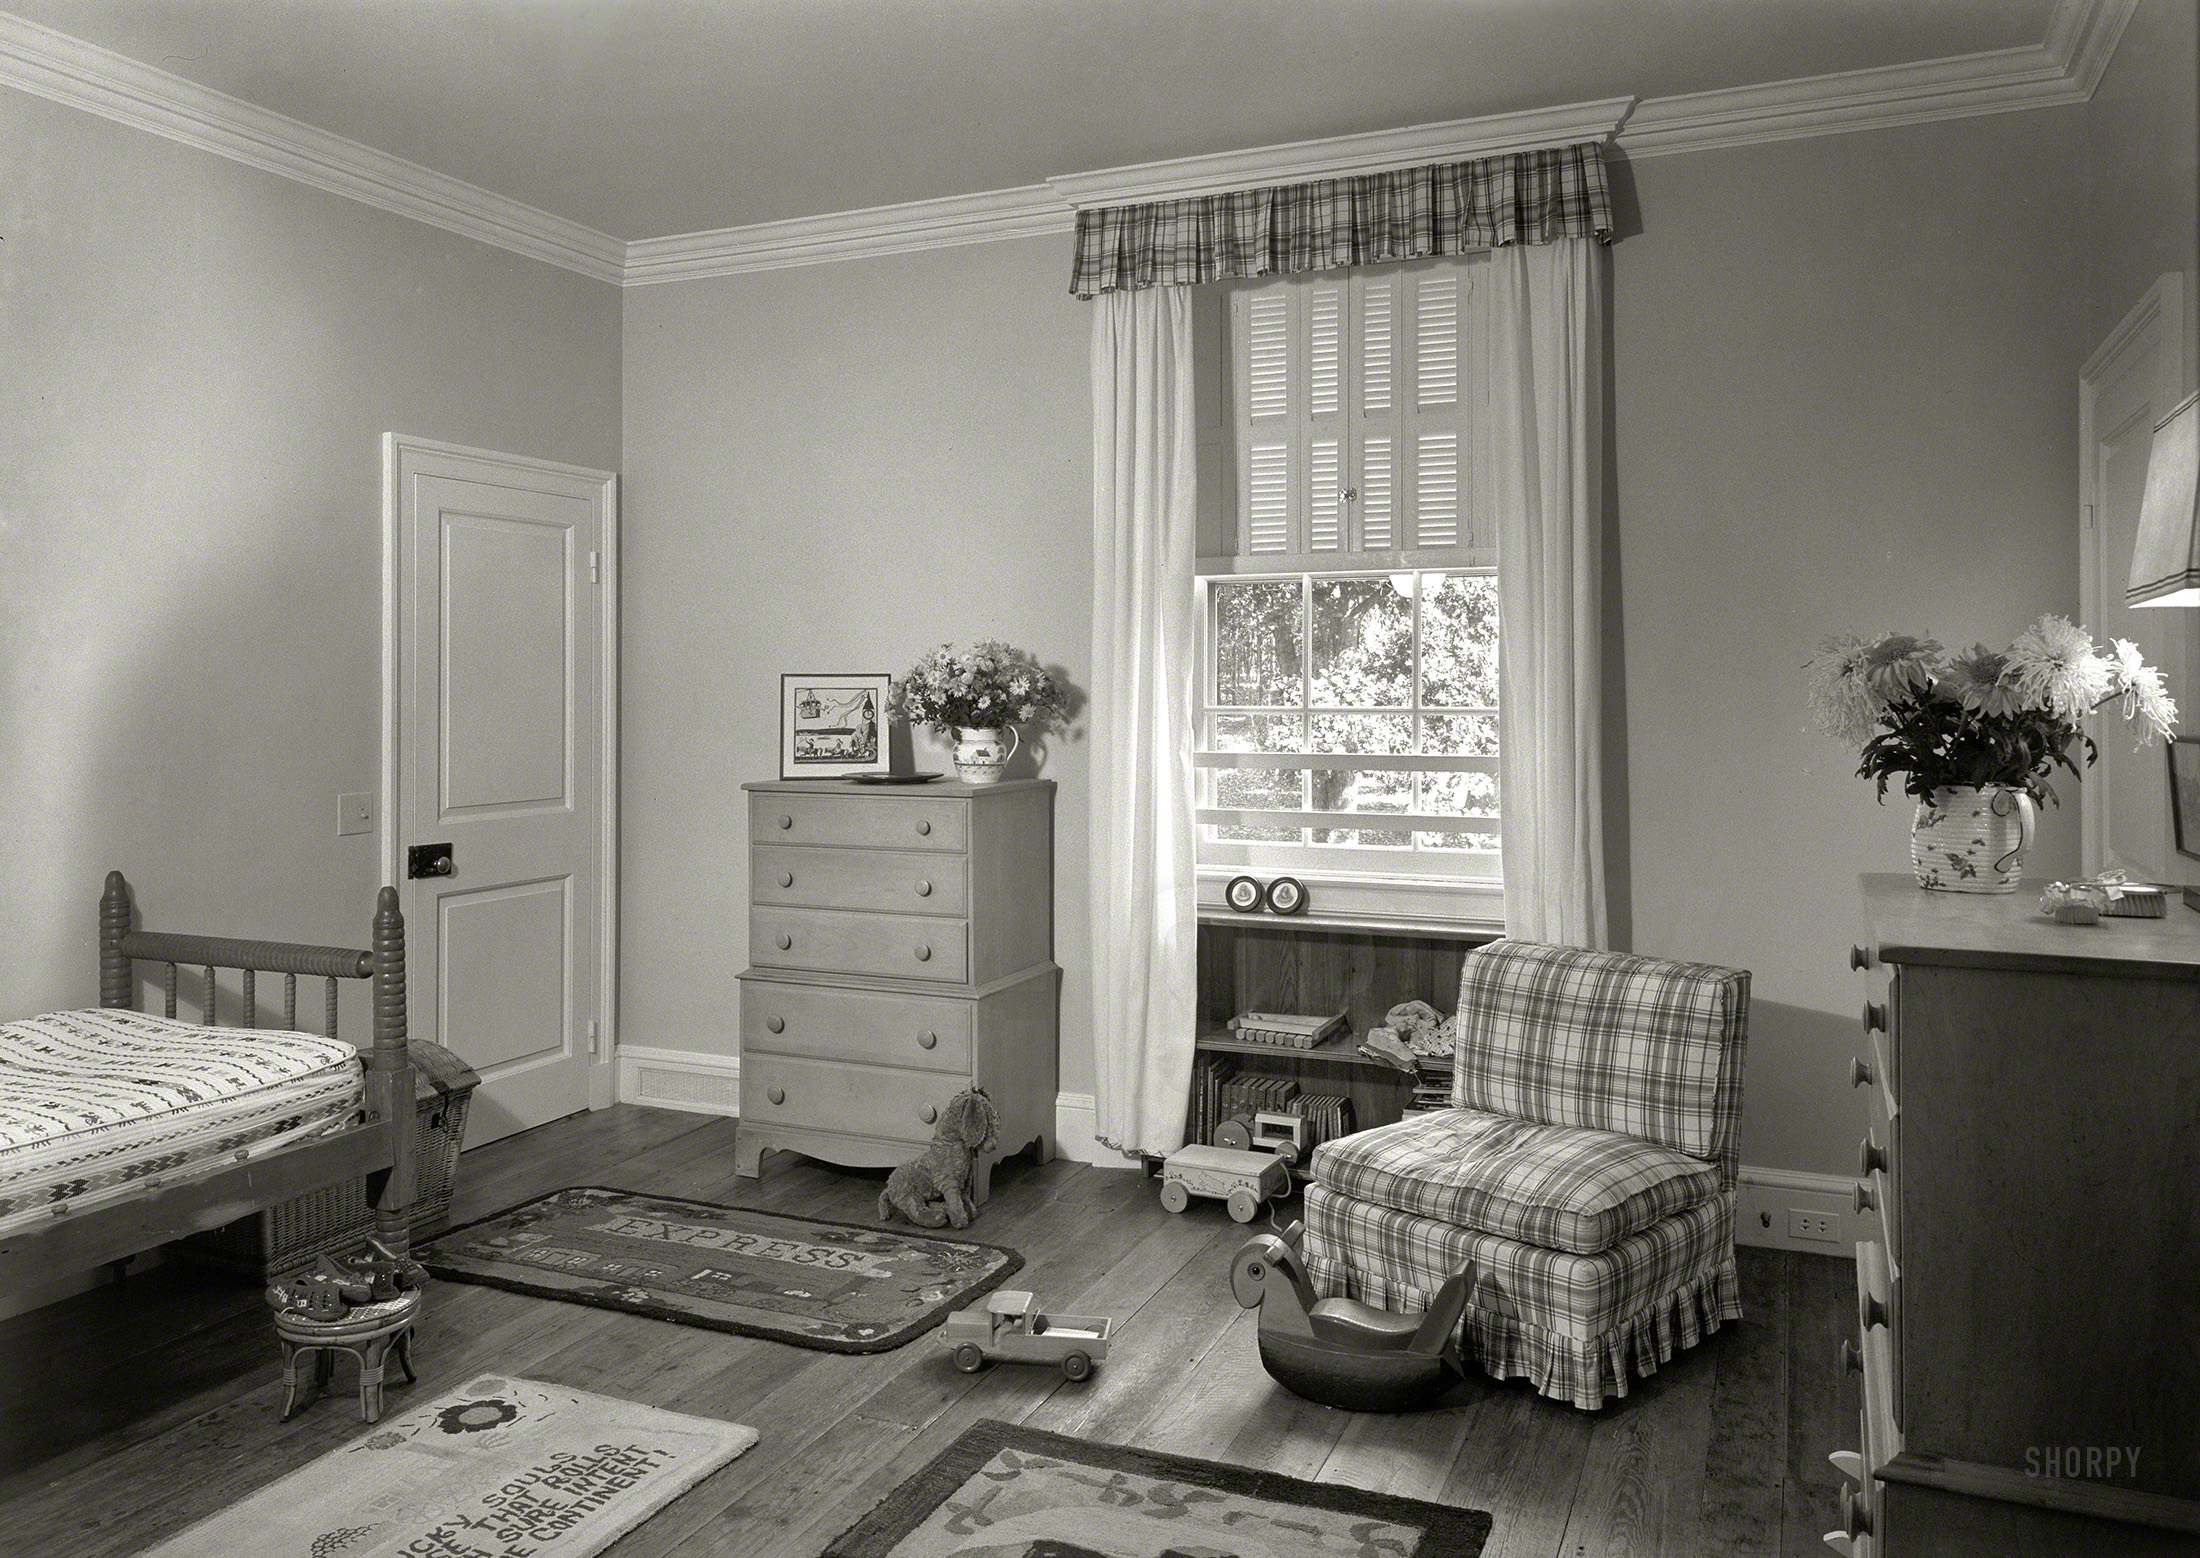 October 29, 1946. "Paul Mellon, residence in Upperville, Virginia. Tim's room." 5x7 acetate negative by Gottscho-Schleisner. View full size.